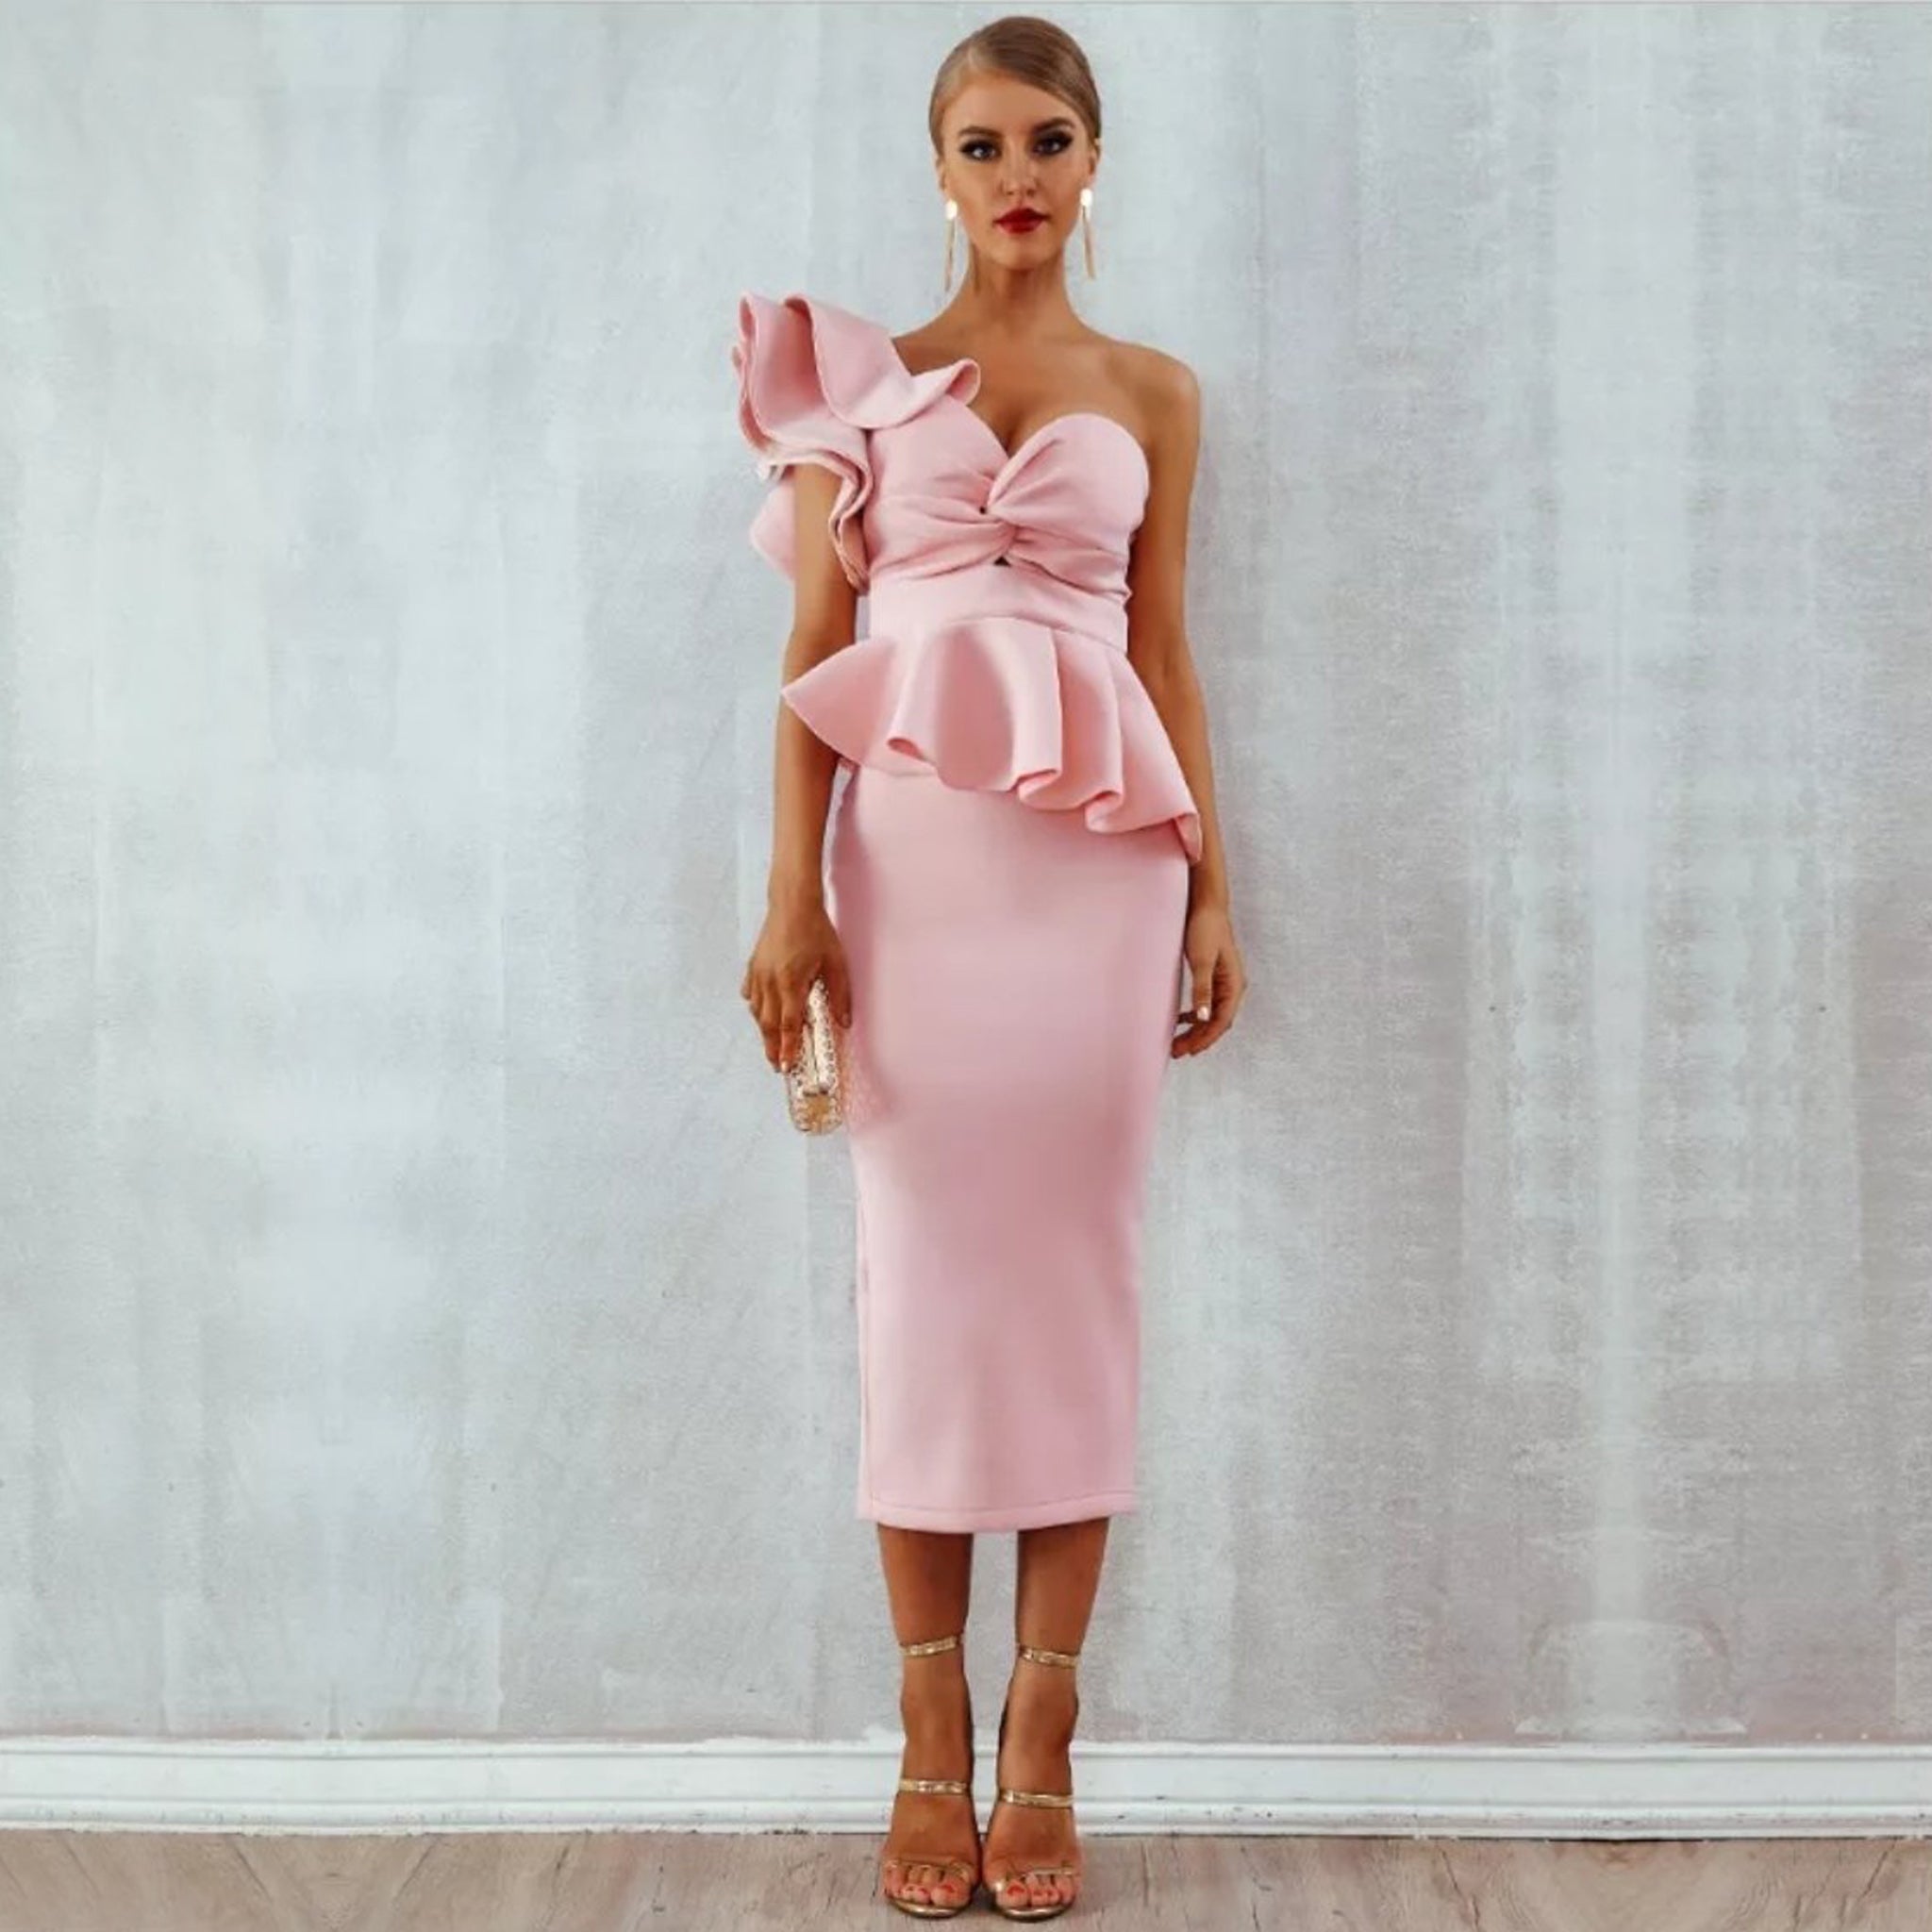 Starlet Ruffle Dress- Pink - Top Glam Shop